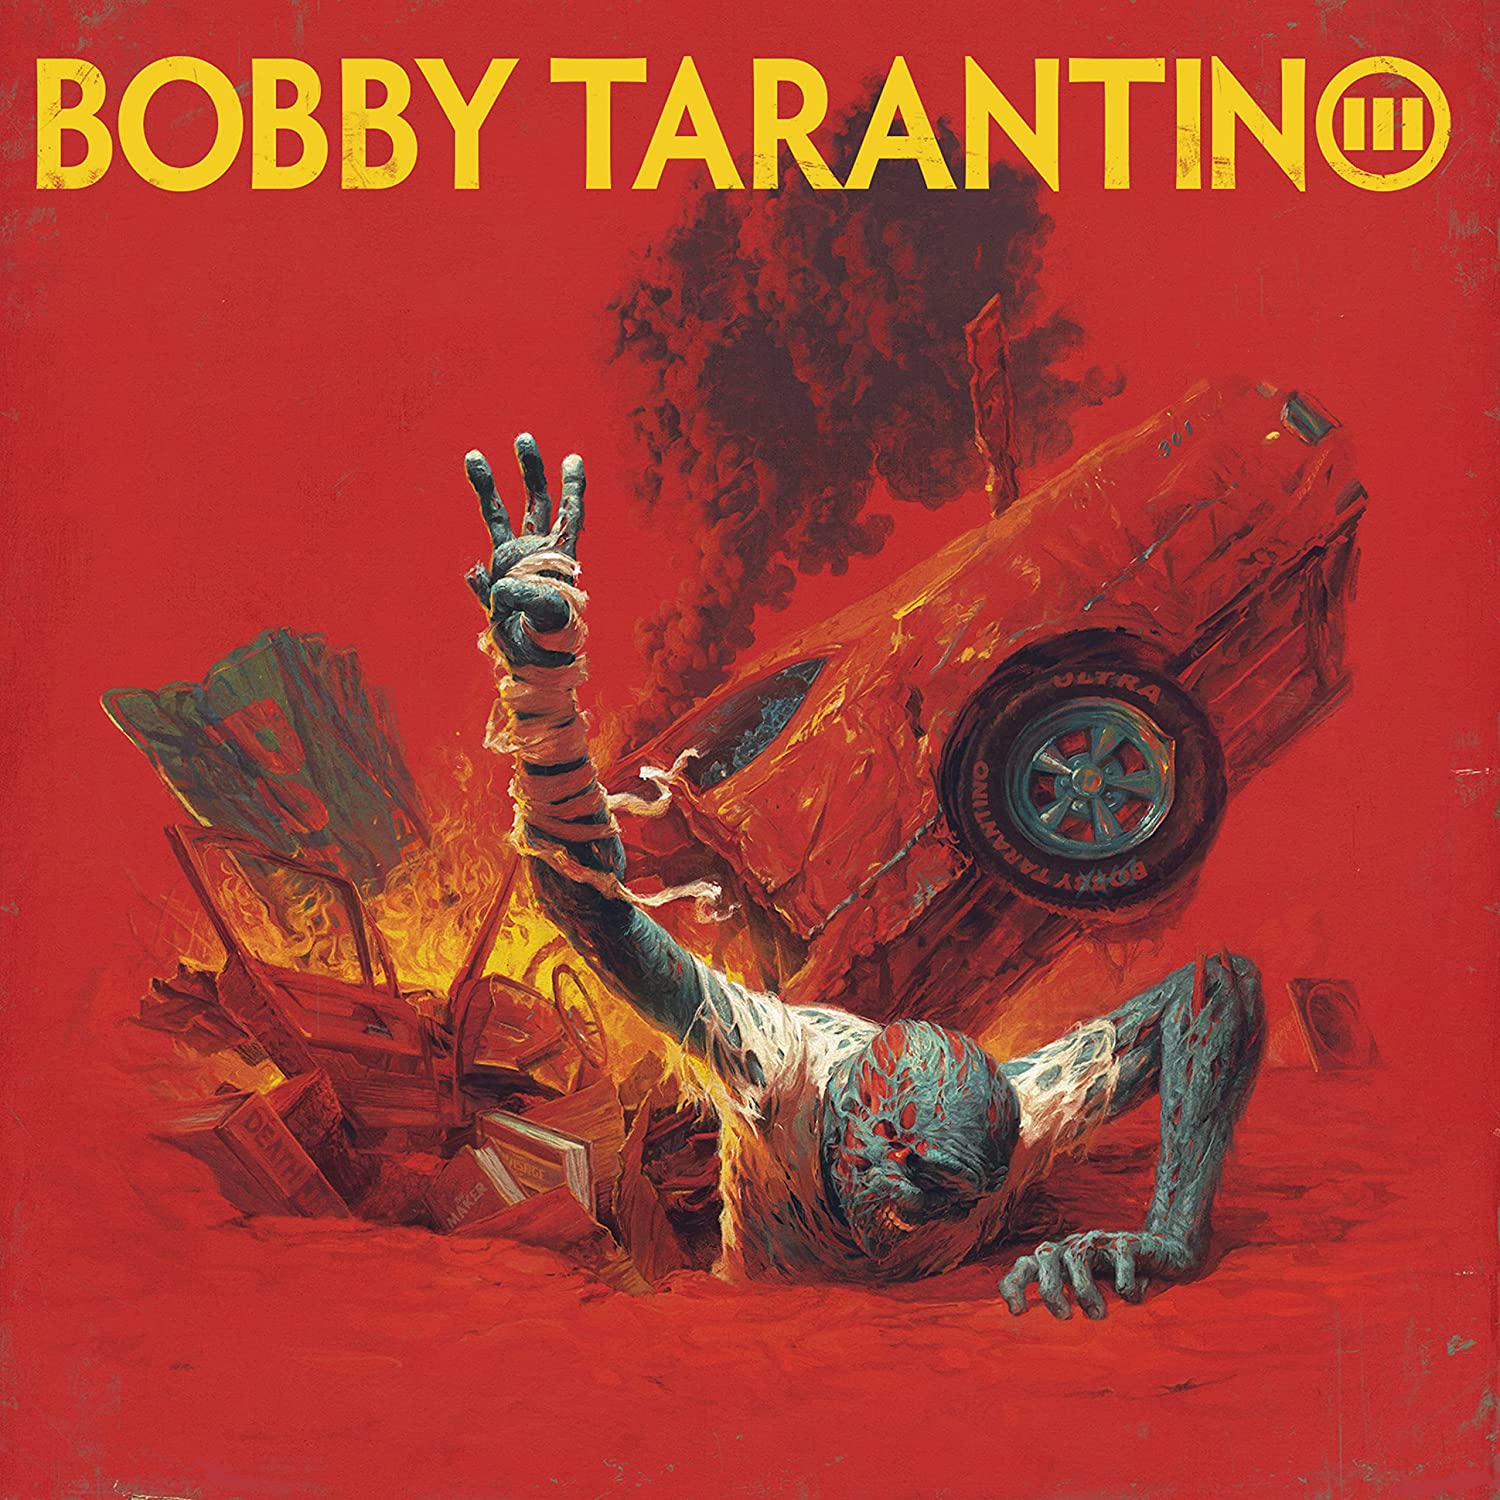 LOGIC - BOBBY TARANTINO III Vinyl LP